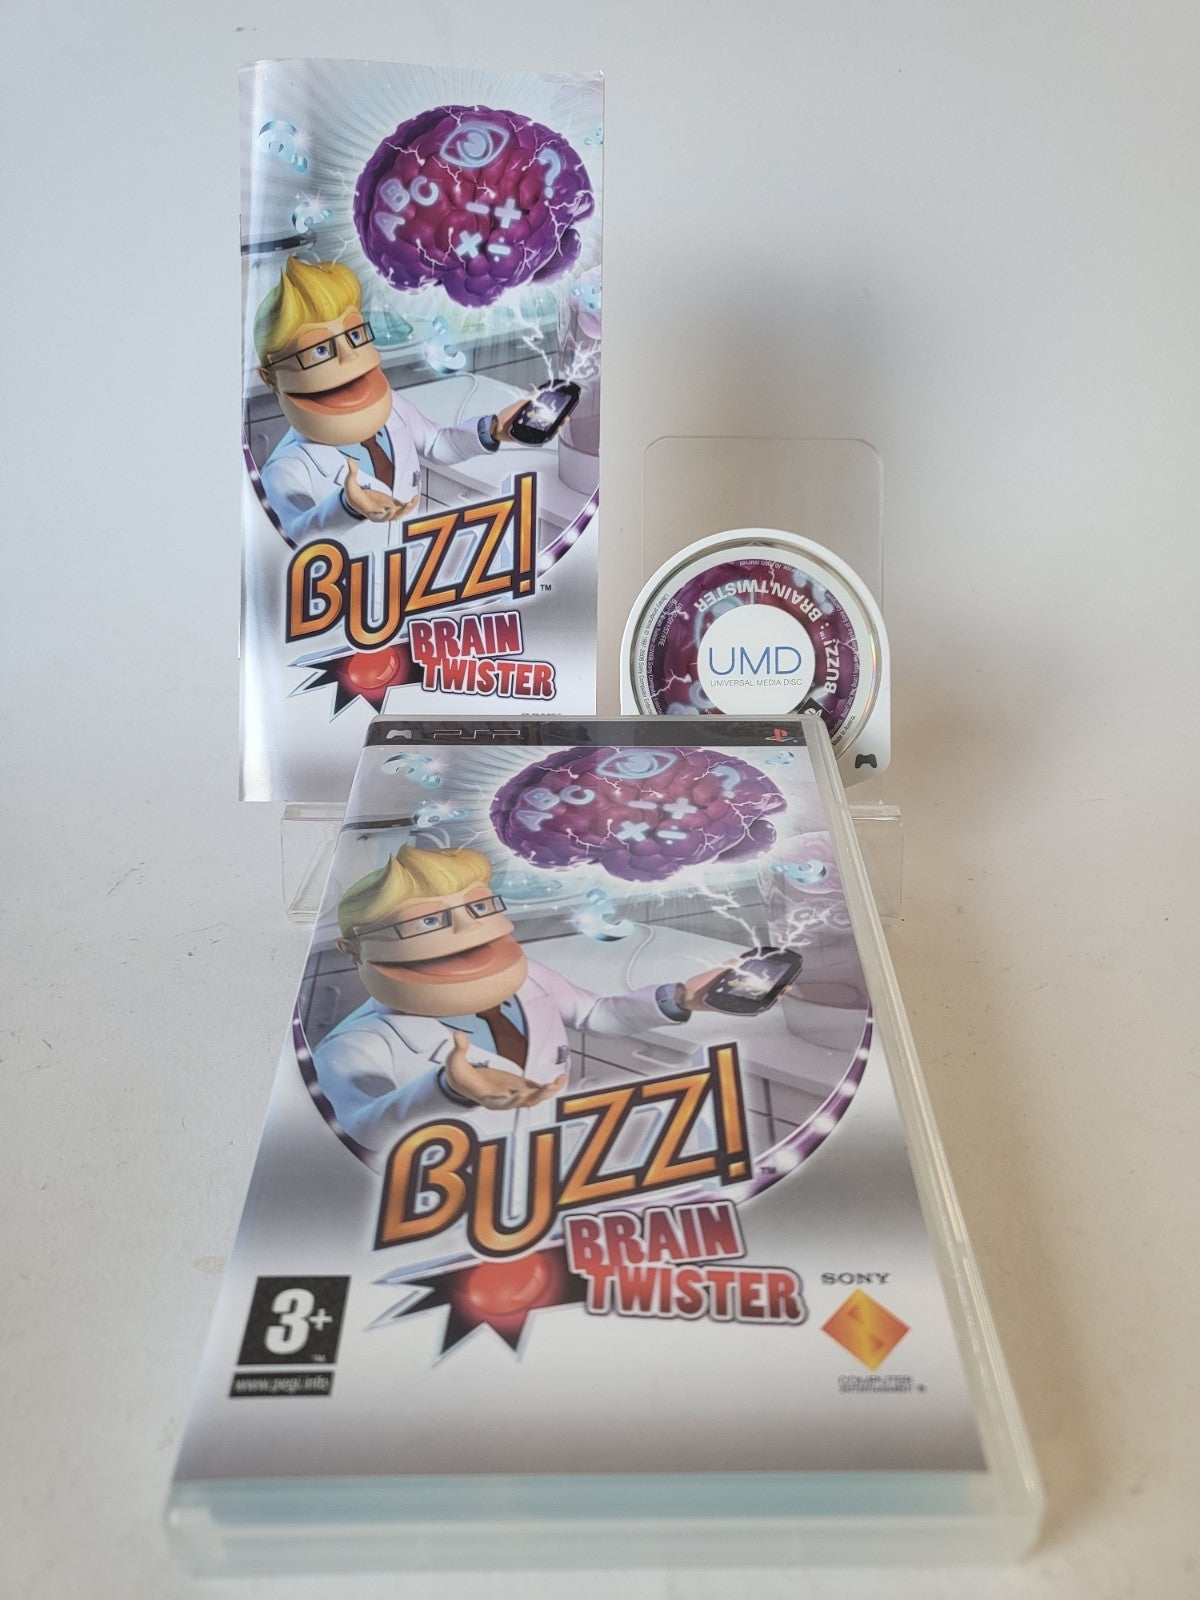 Buzz! Brain Twister Playstation Portable